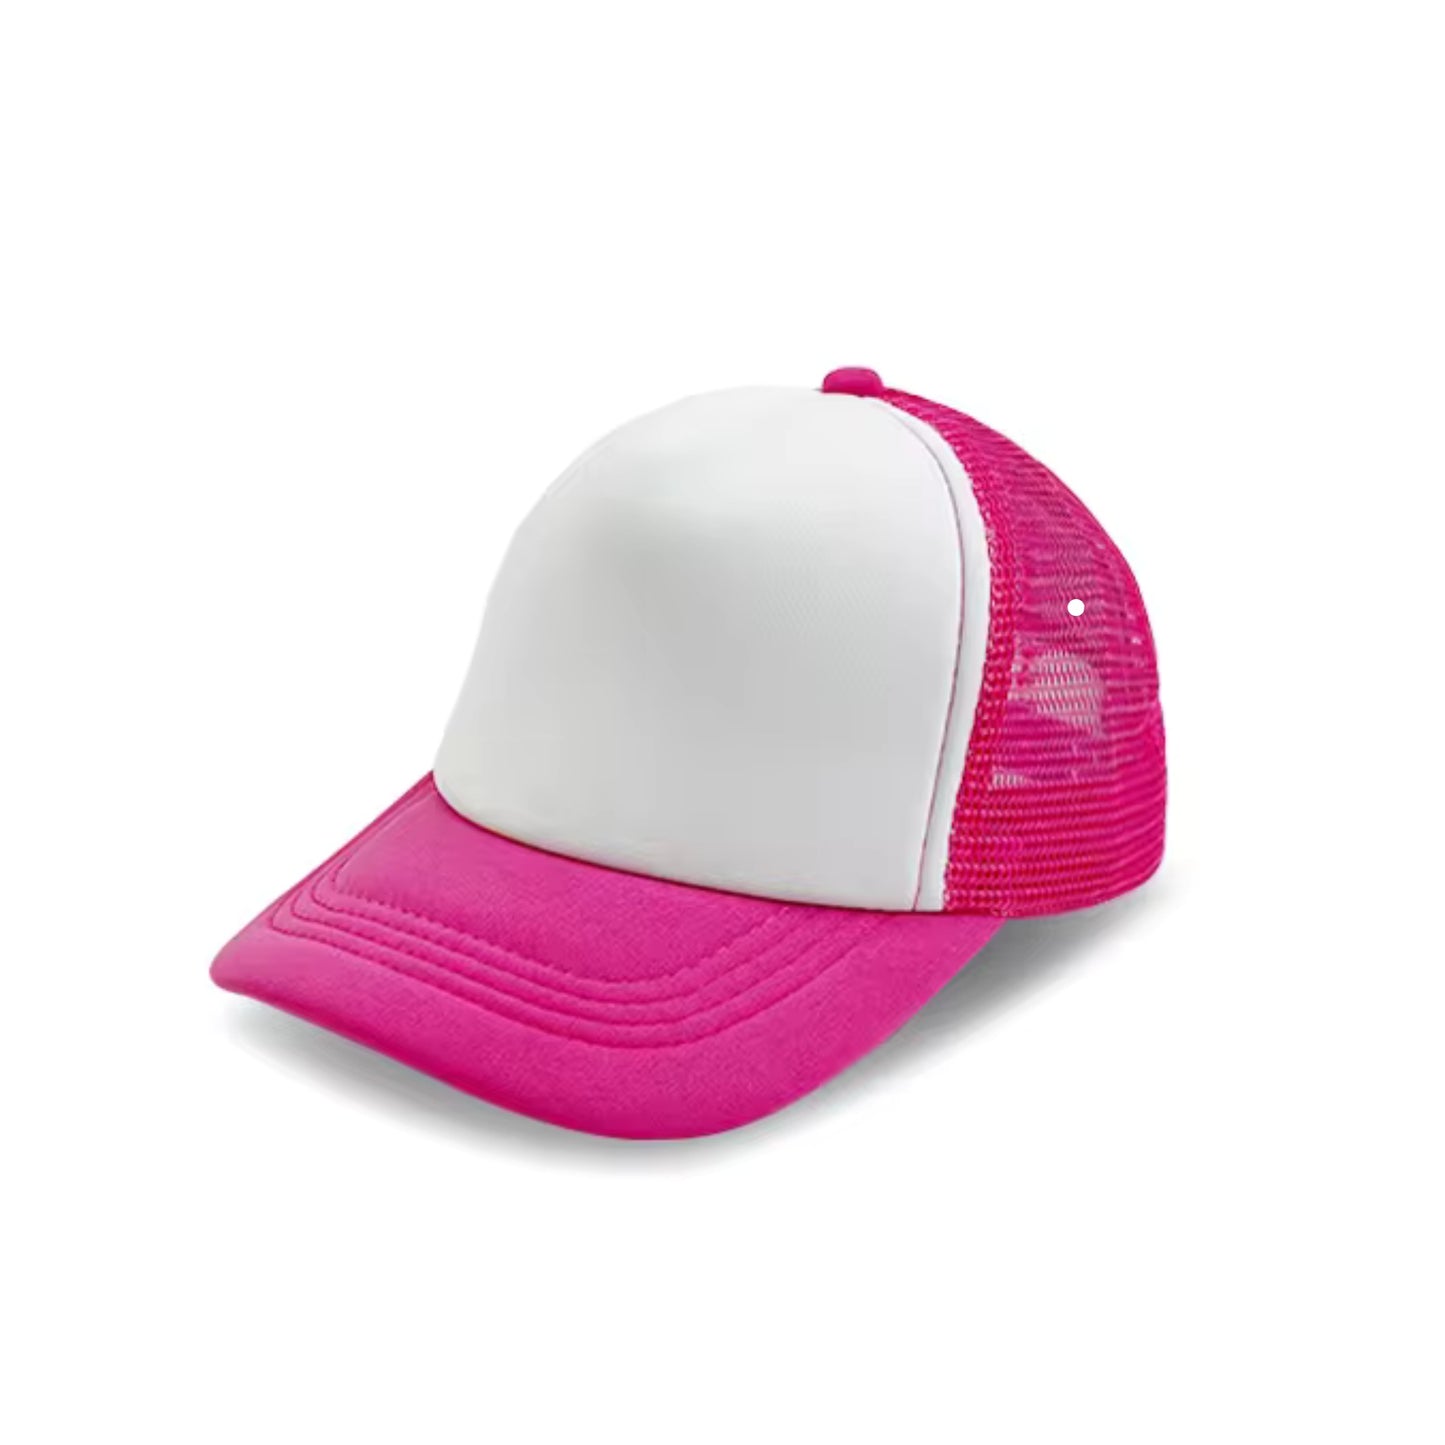 Snapback Hat - Hot Pink/White